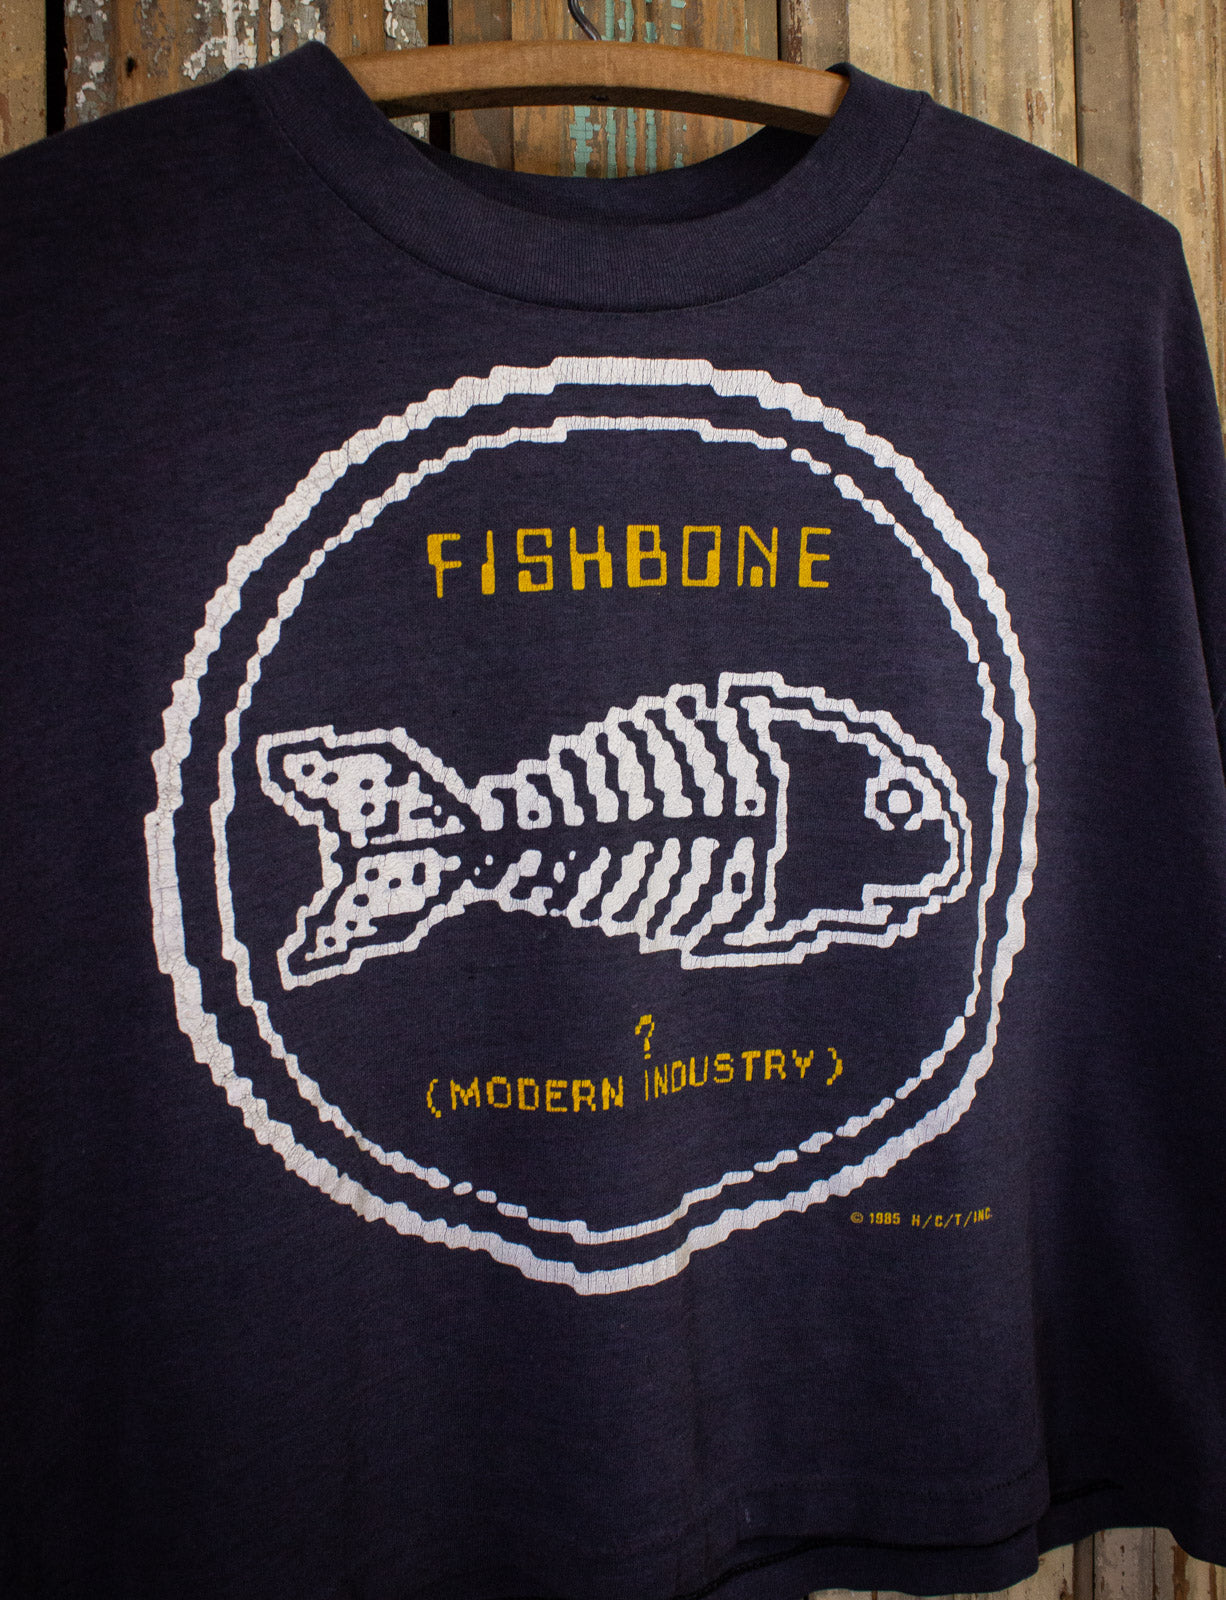 Vintage Fishbone ? (Modern Industry) Cropped Concert T Shirt Black XL